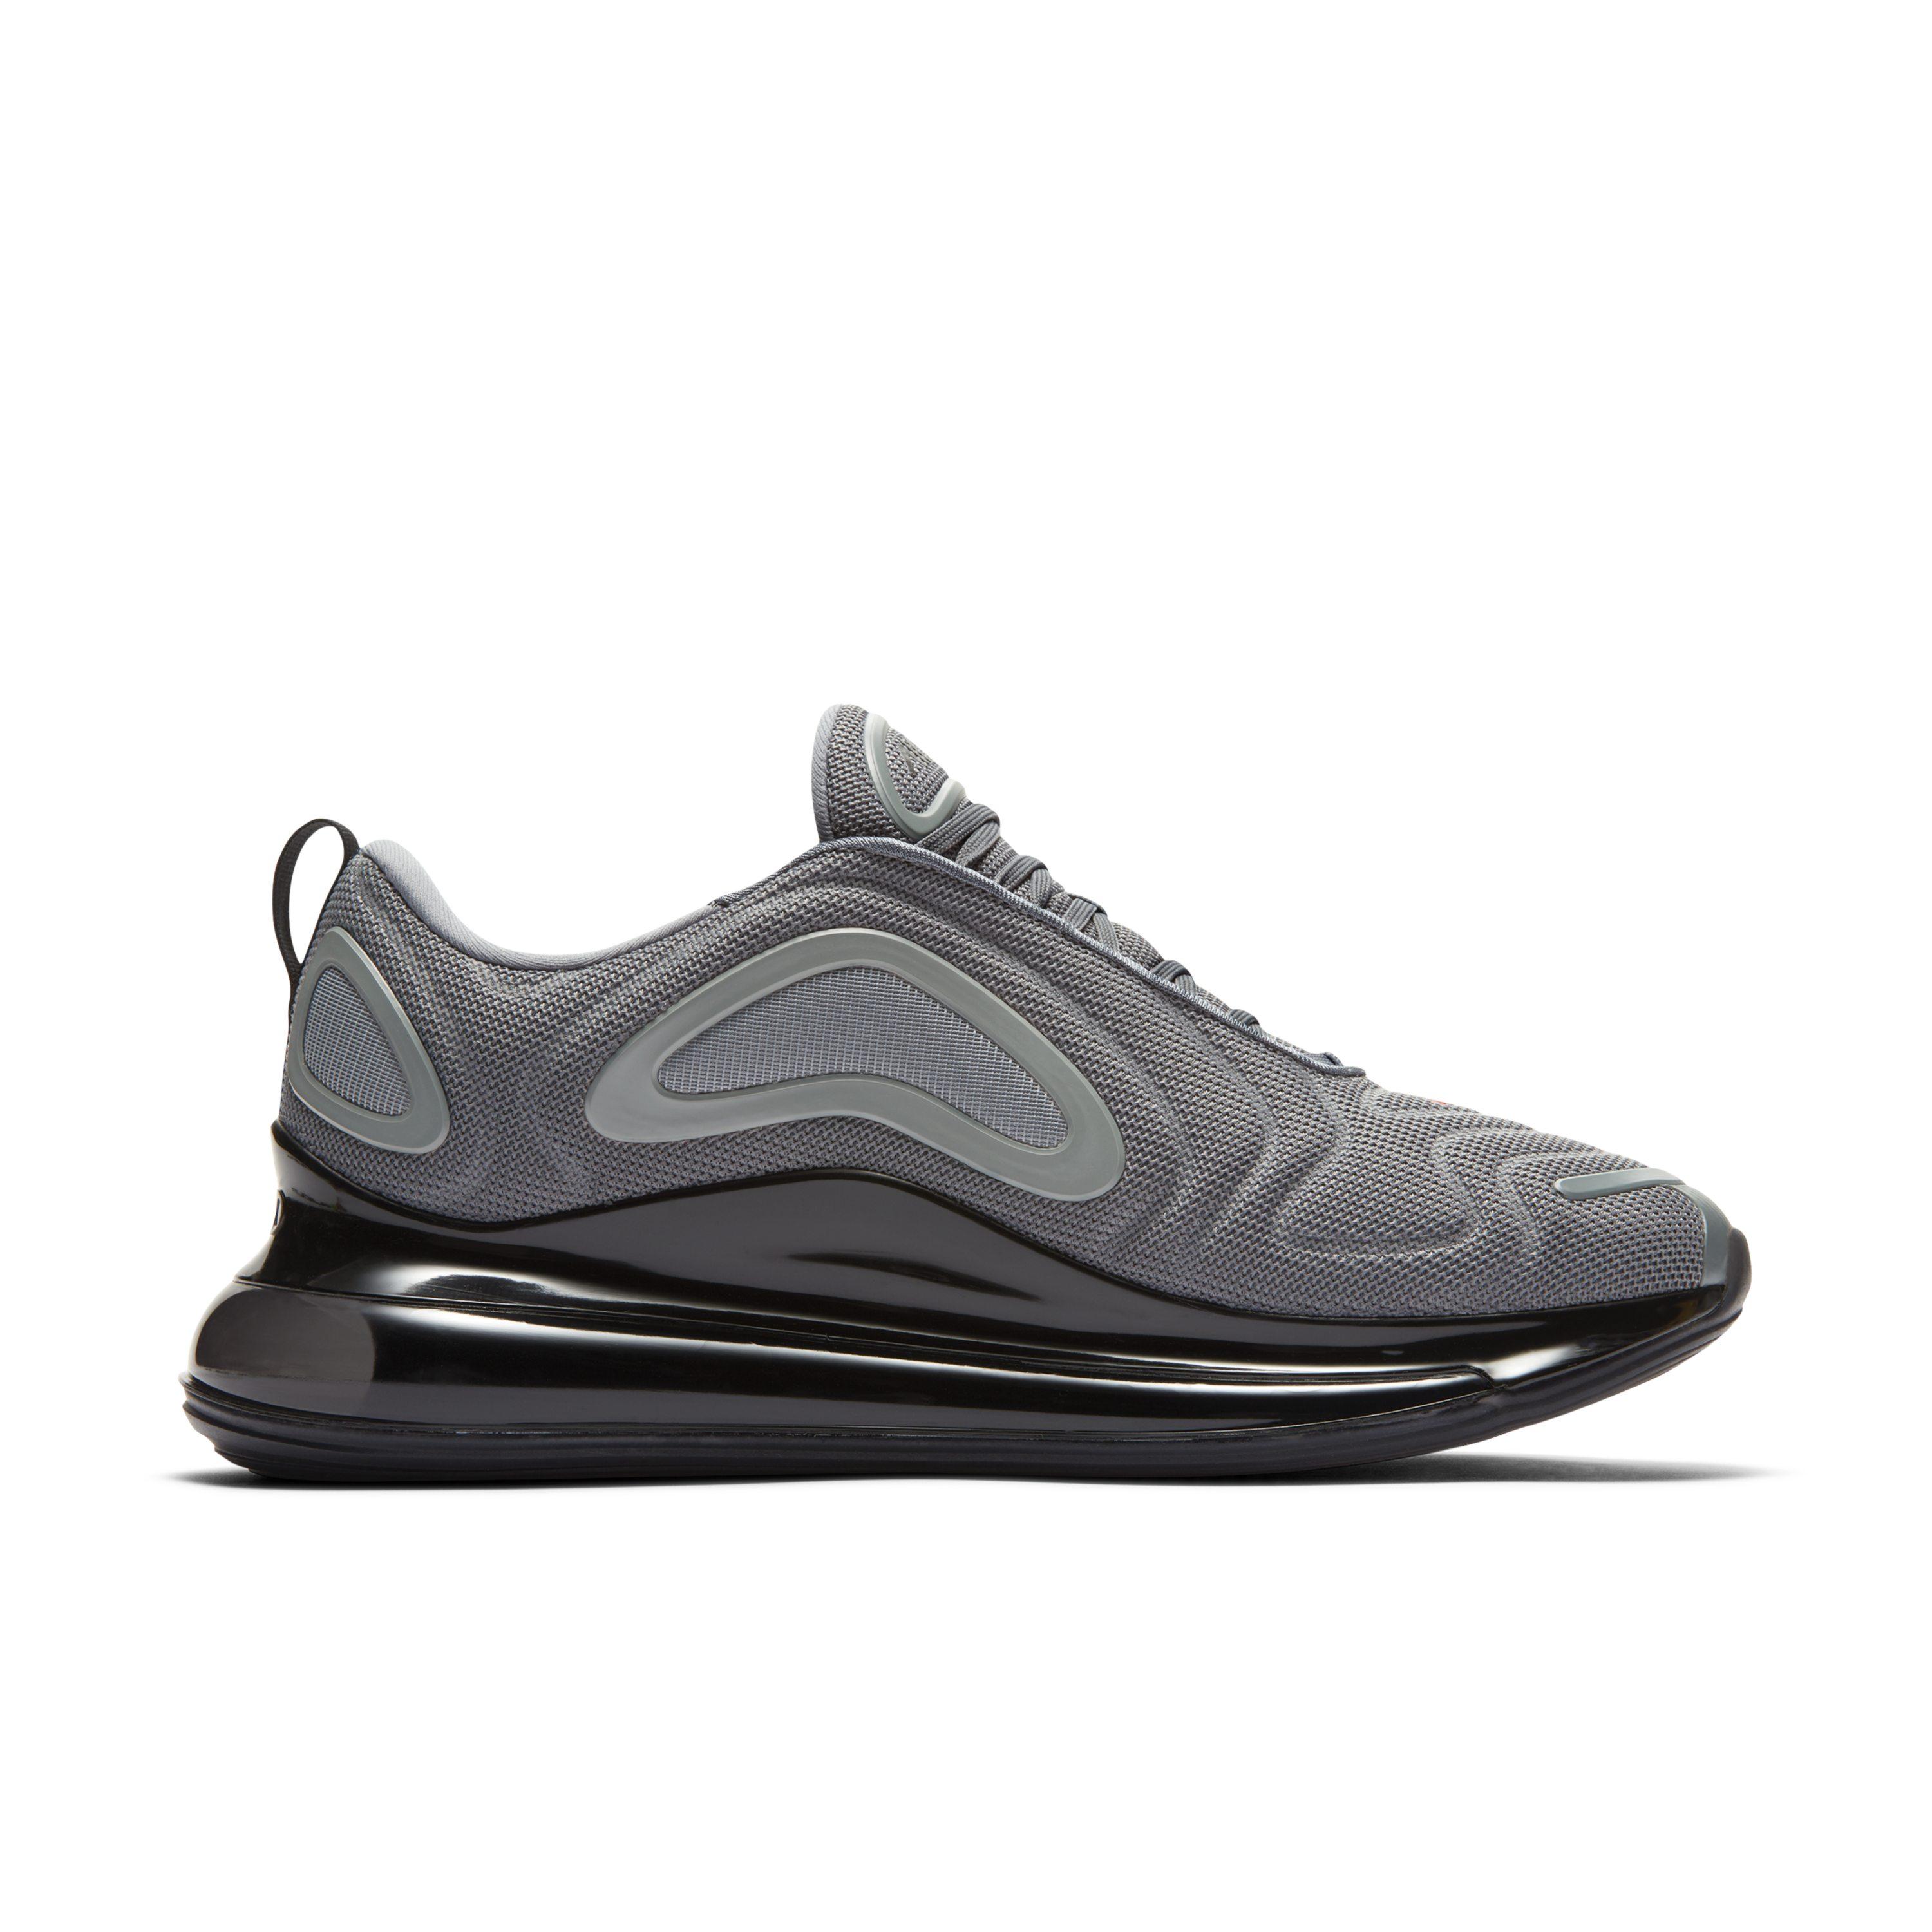 Nike Air Max 720 Shoe in Grey (Grey) for Men - Lyst